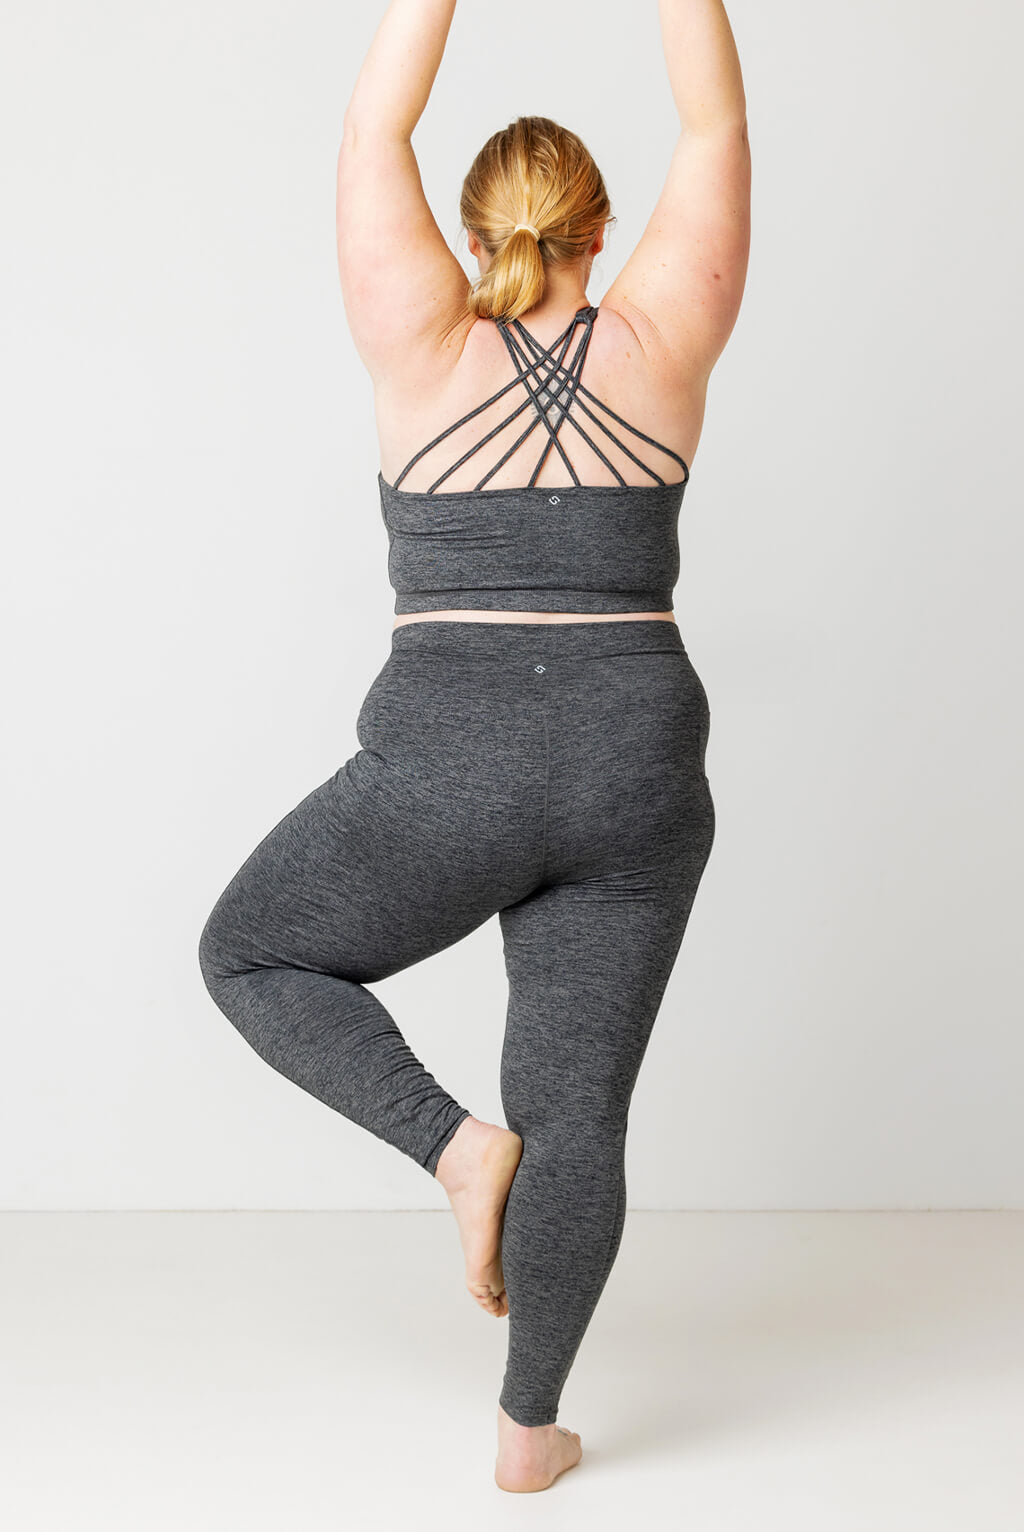 BALANCE COLLECTION BLACK-WHITE FLORAL Work Out Leggings Yoga Pants DRY WIK  SZ S | eBay